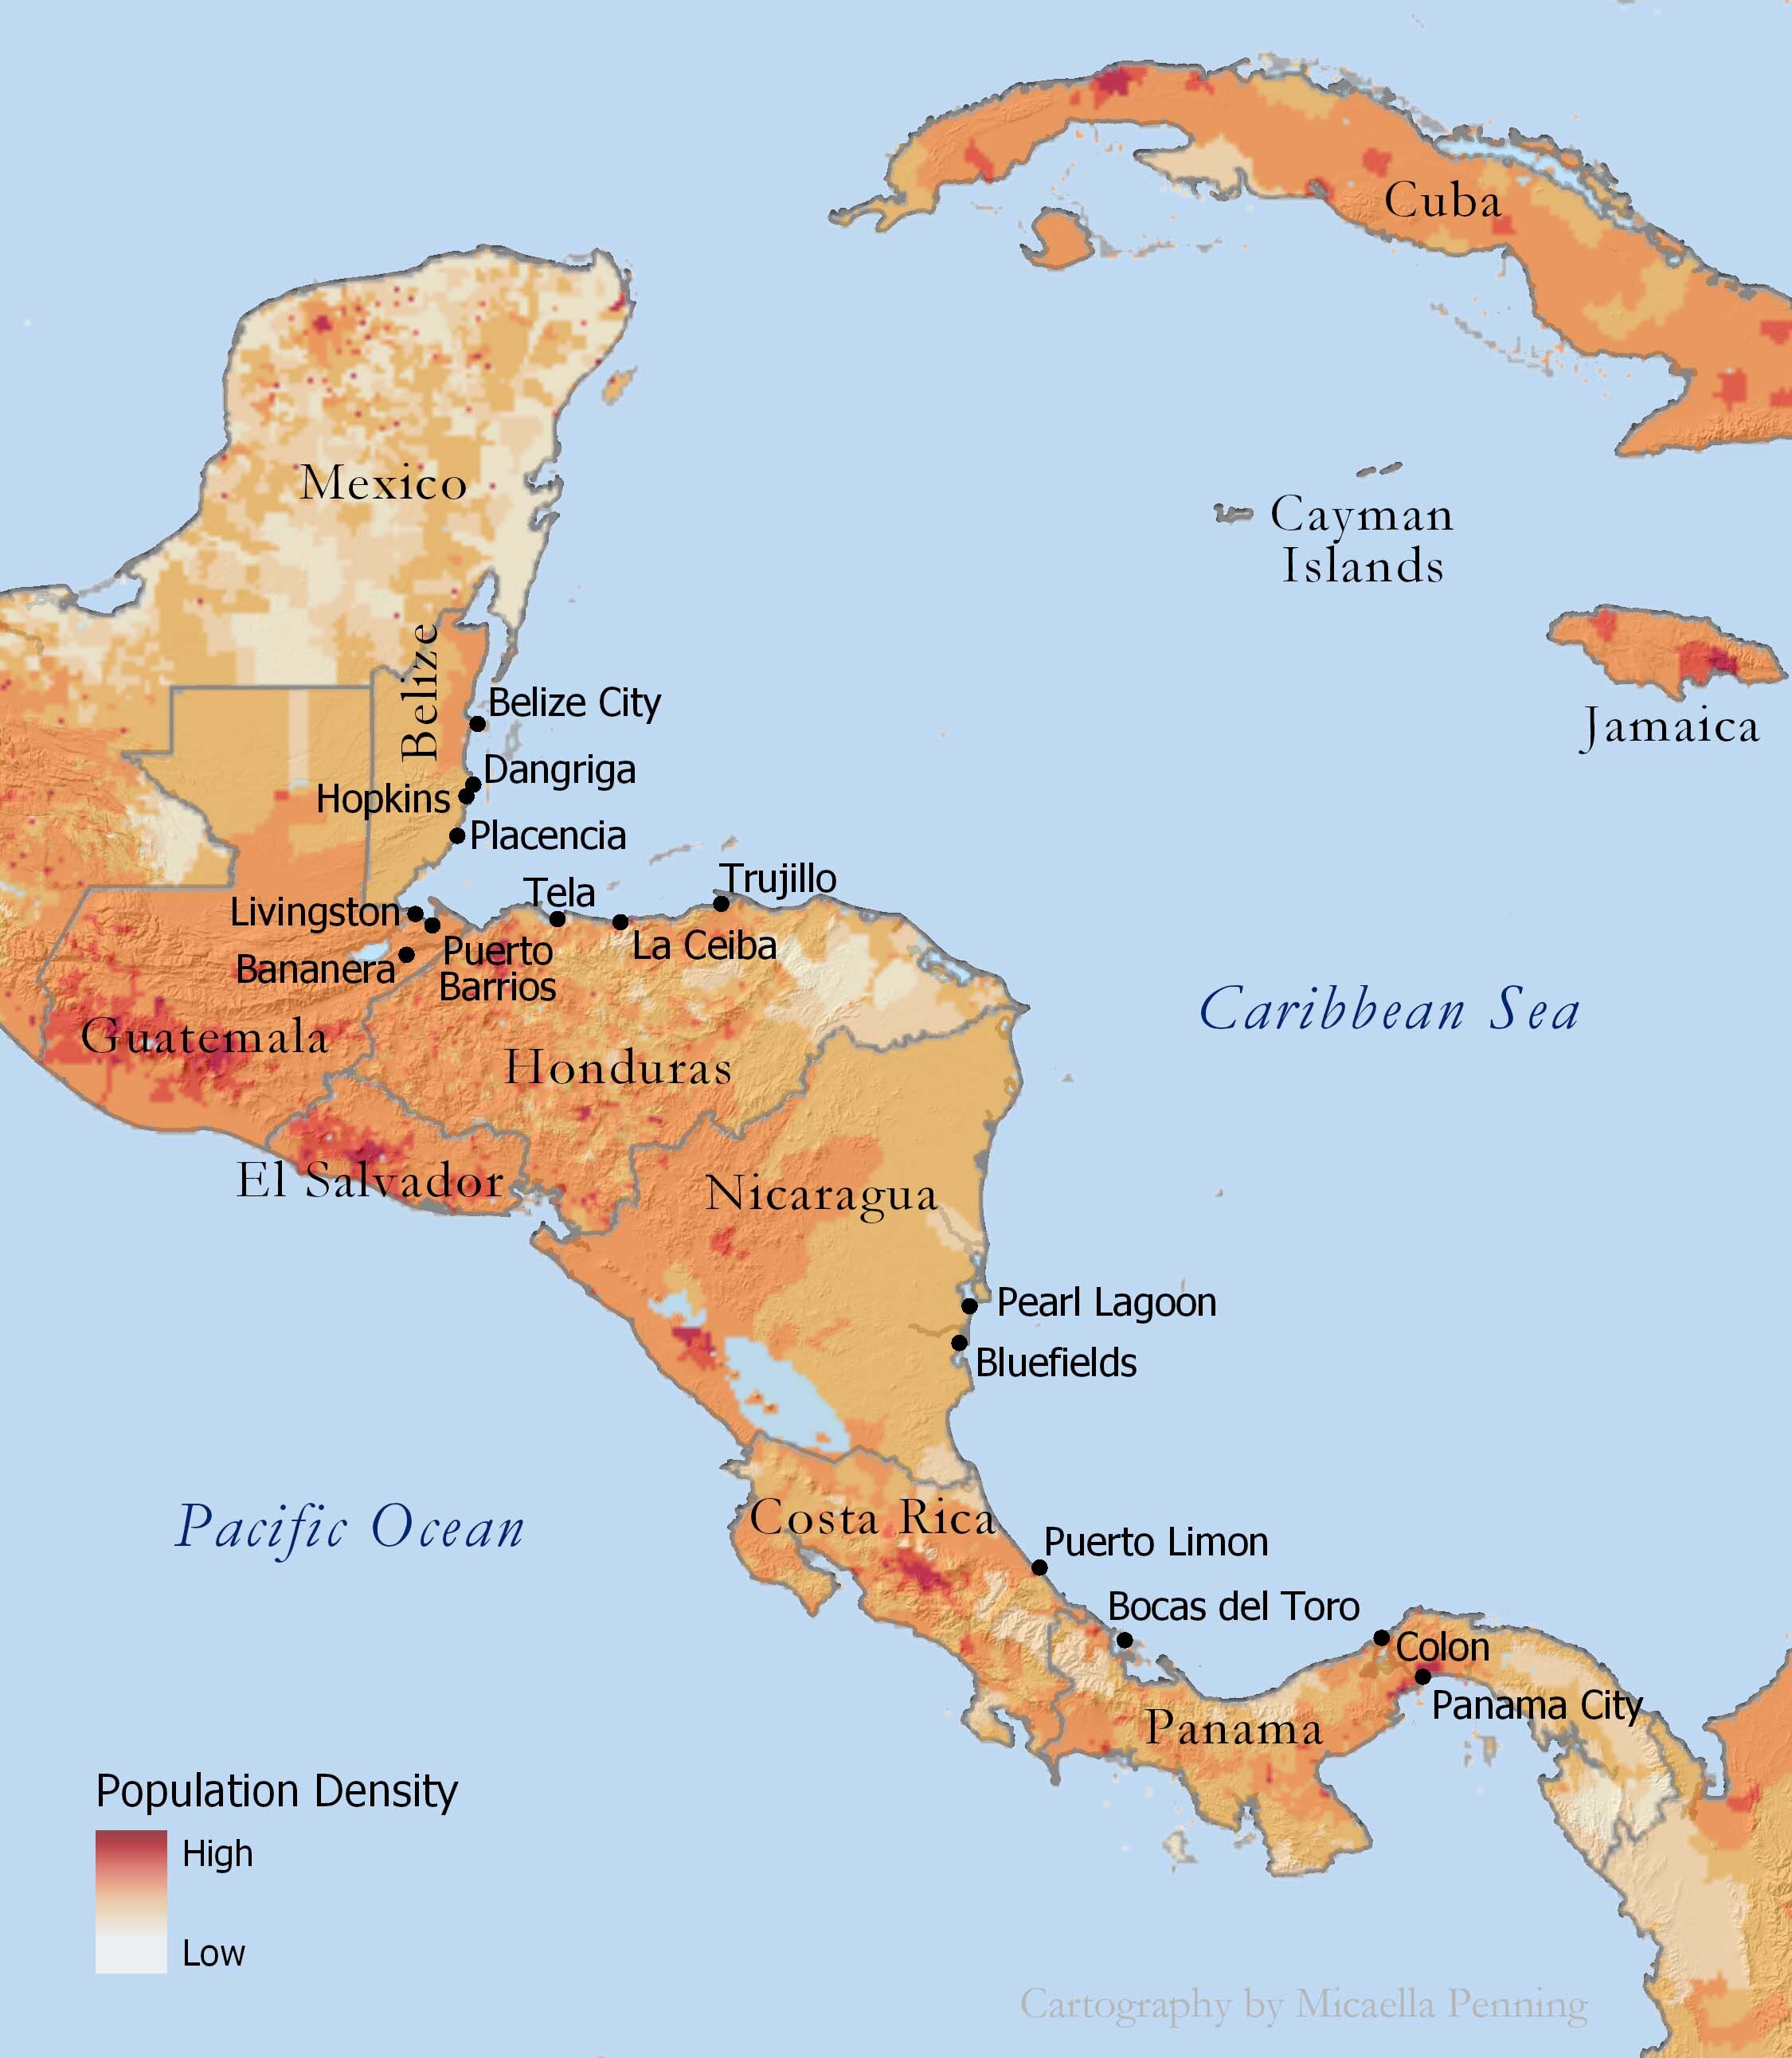   Central America Population Density  